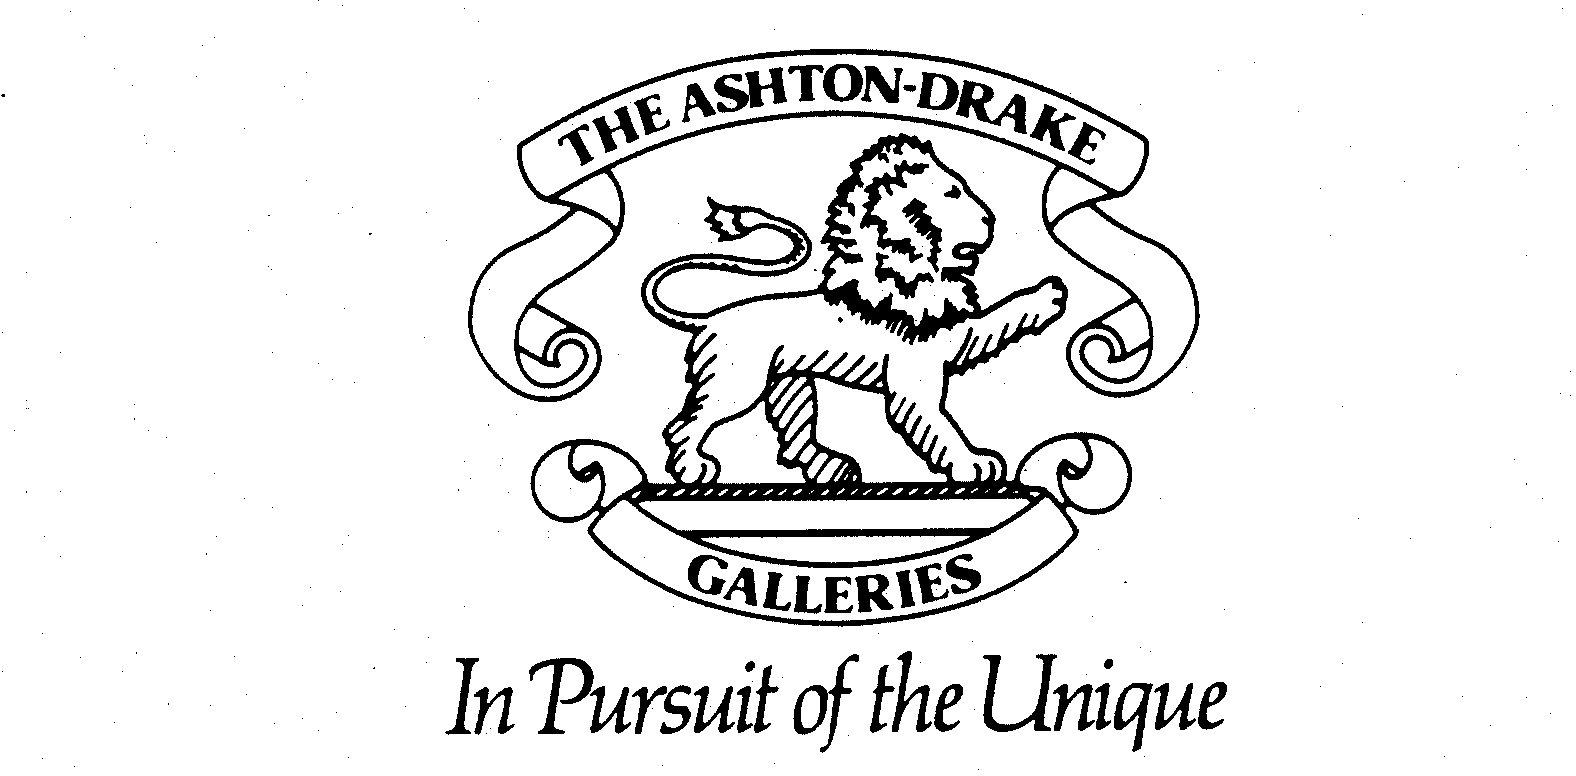  THE ASHTON-DRAKE GALLERIES IN PURSUIT OF THE UNIQUE